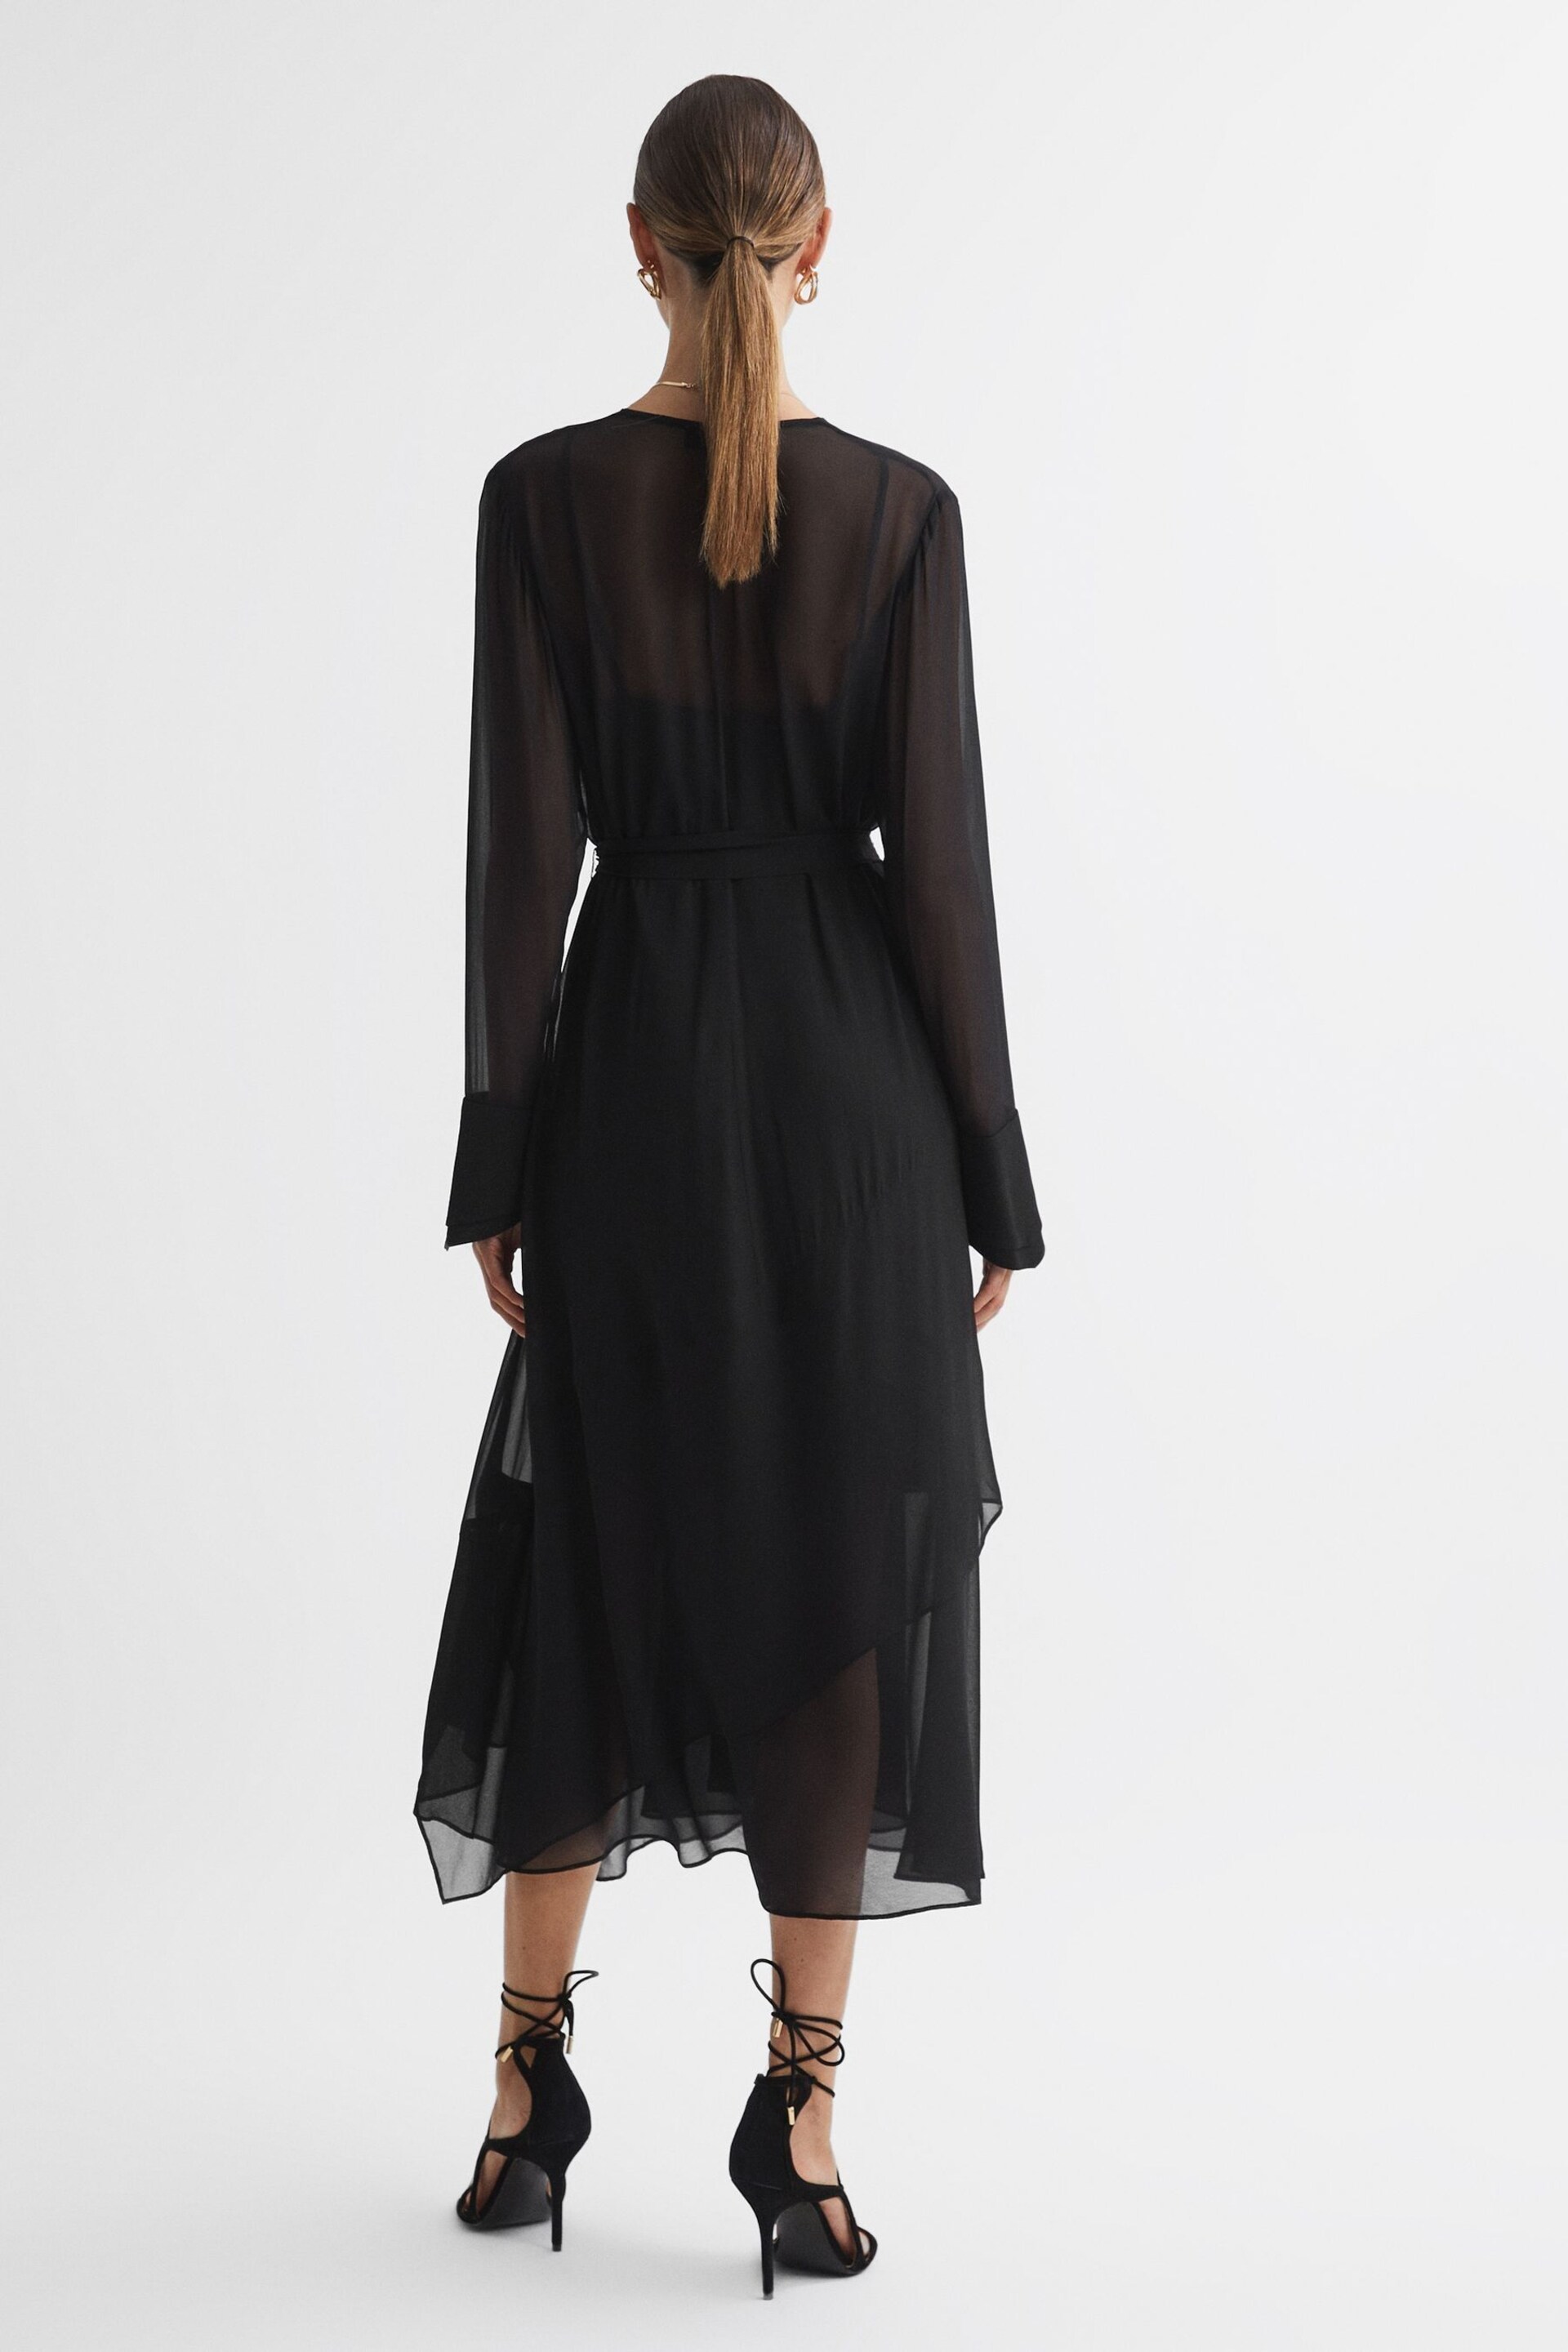 Reiss Black Callie Belted Ruffle Midi Dress - Image 5 of 5